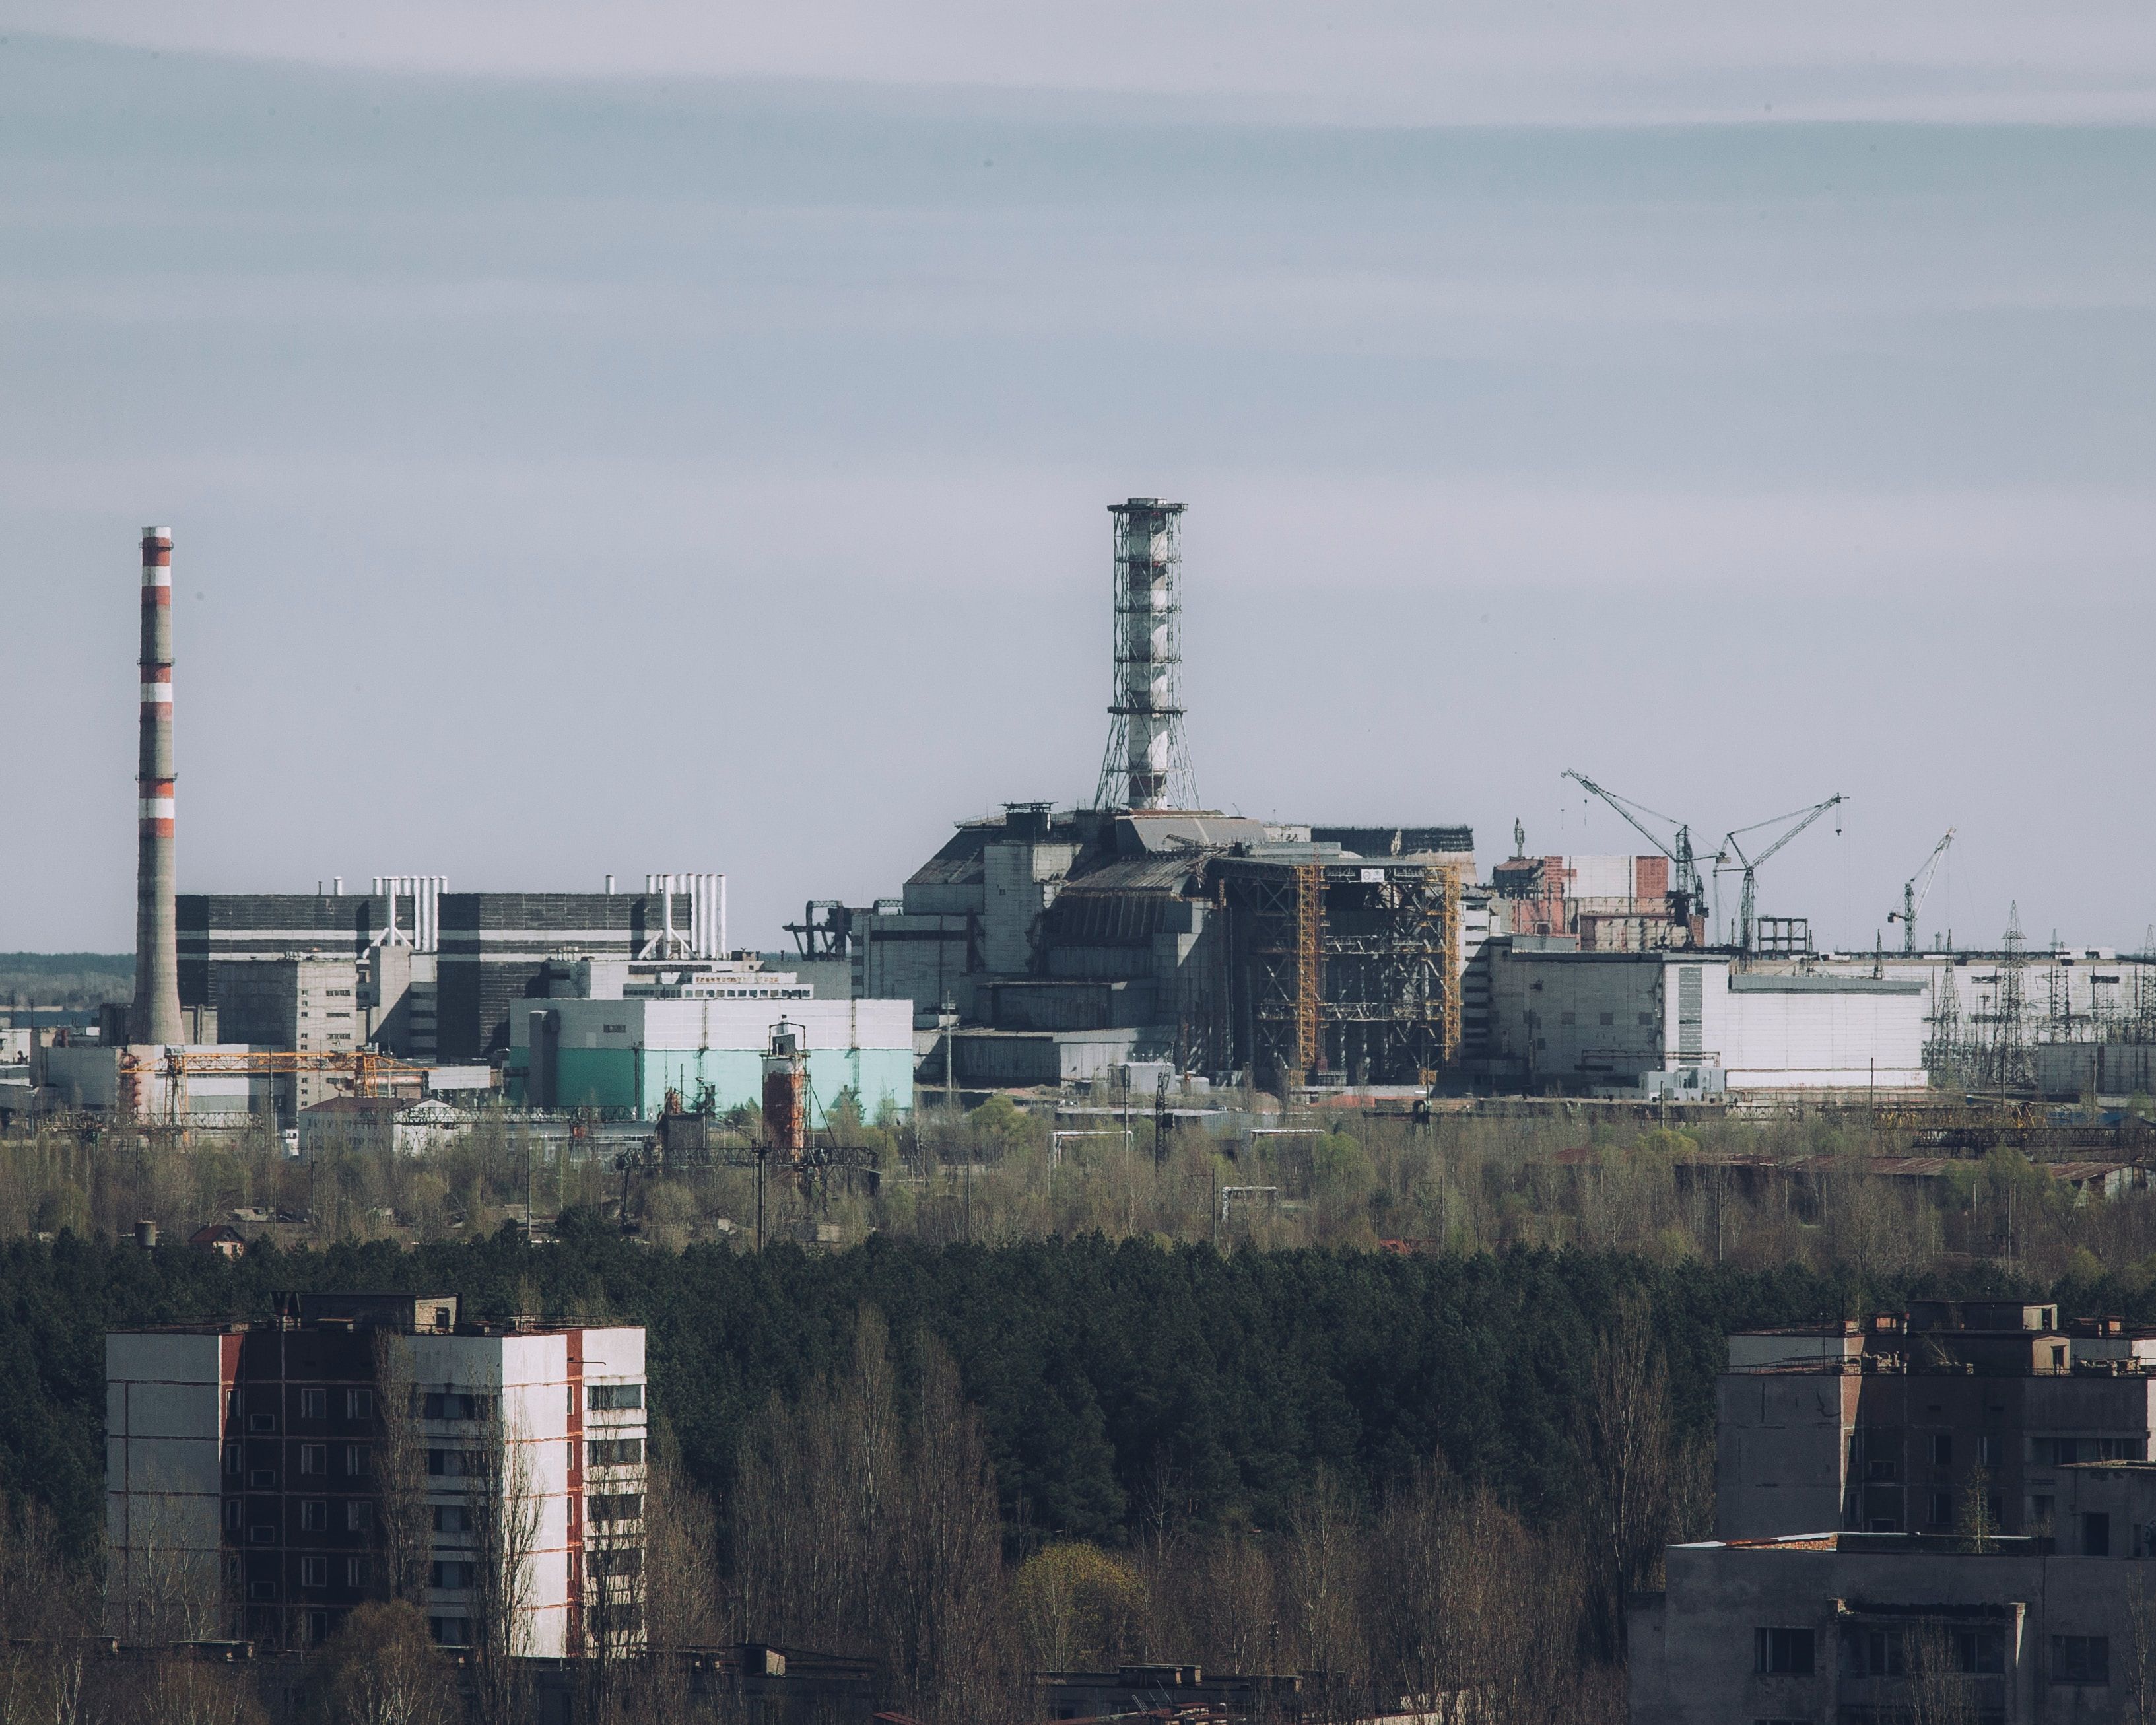 Chernobyl - Pripyat, Ukraine - April 2009 Reactor 4